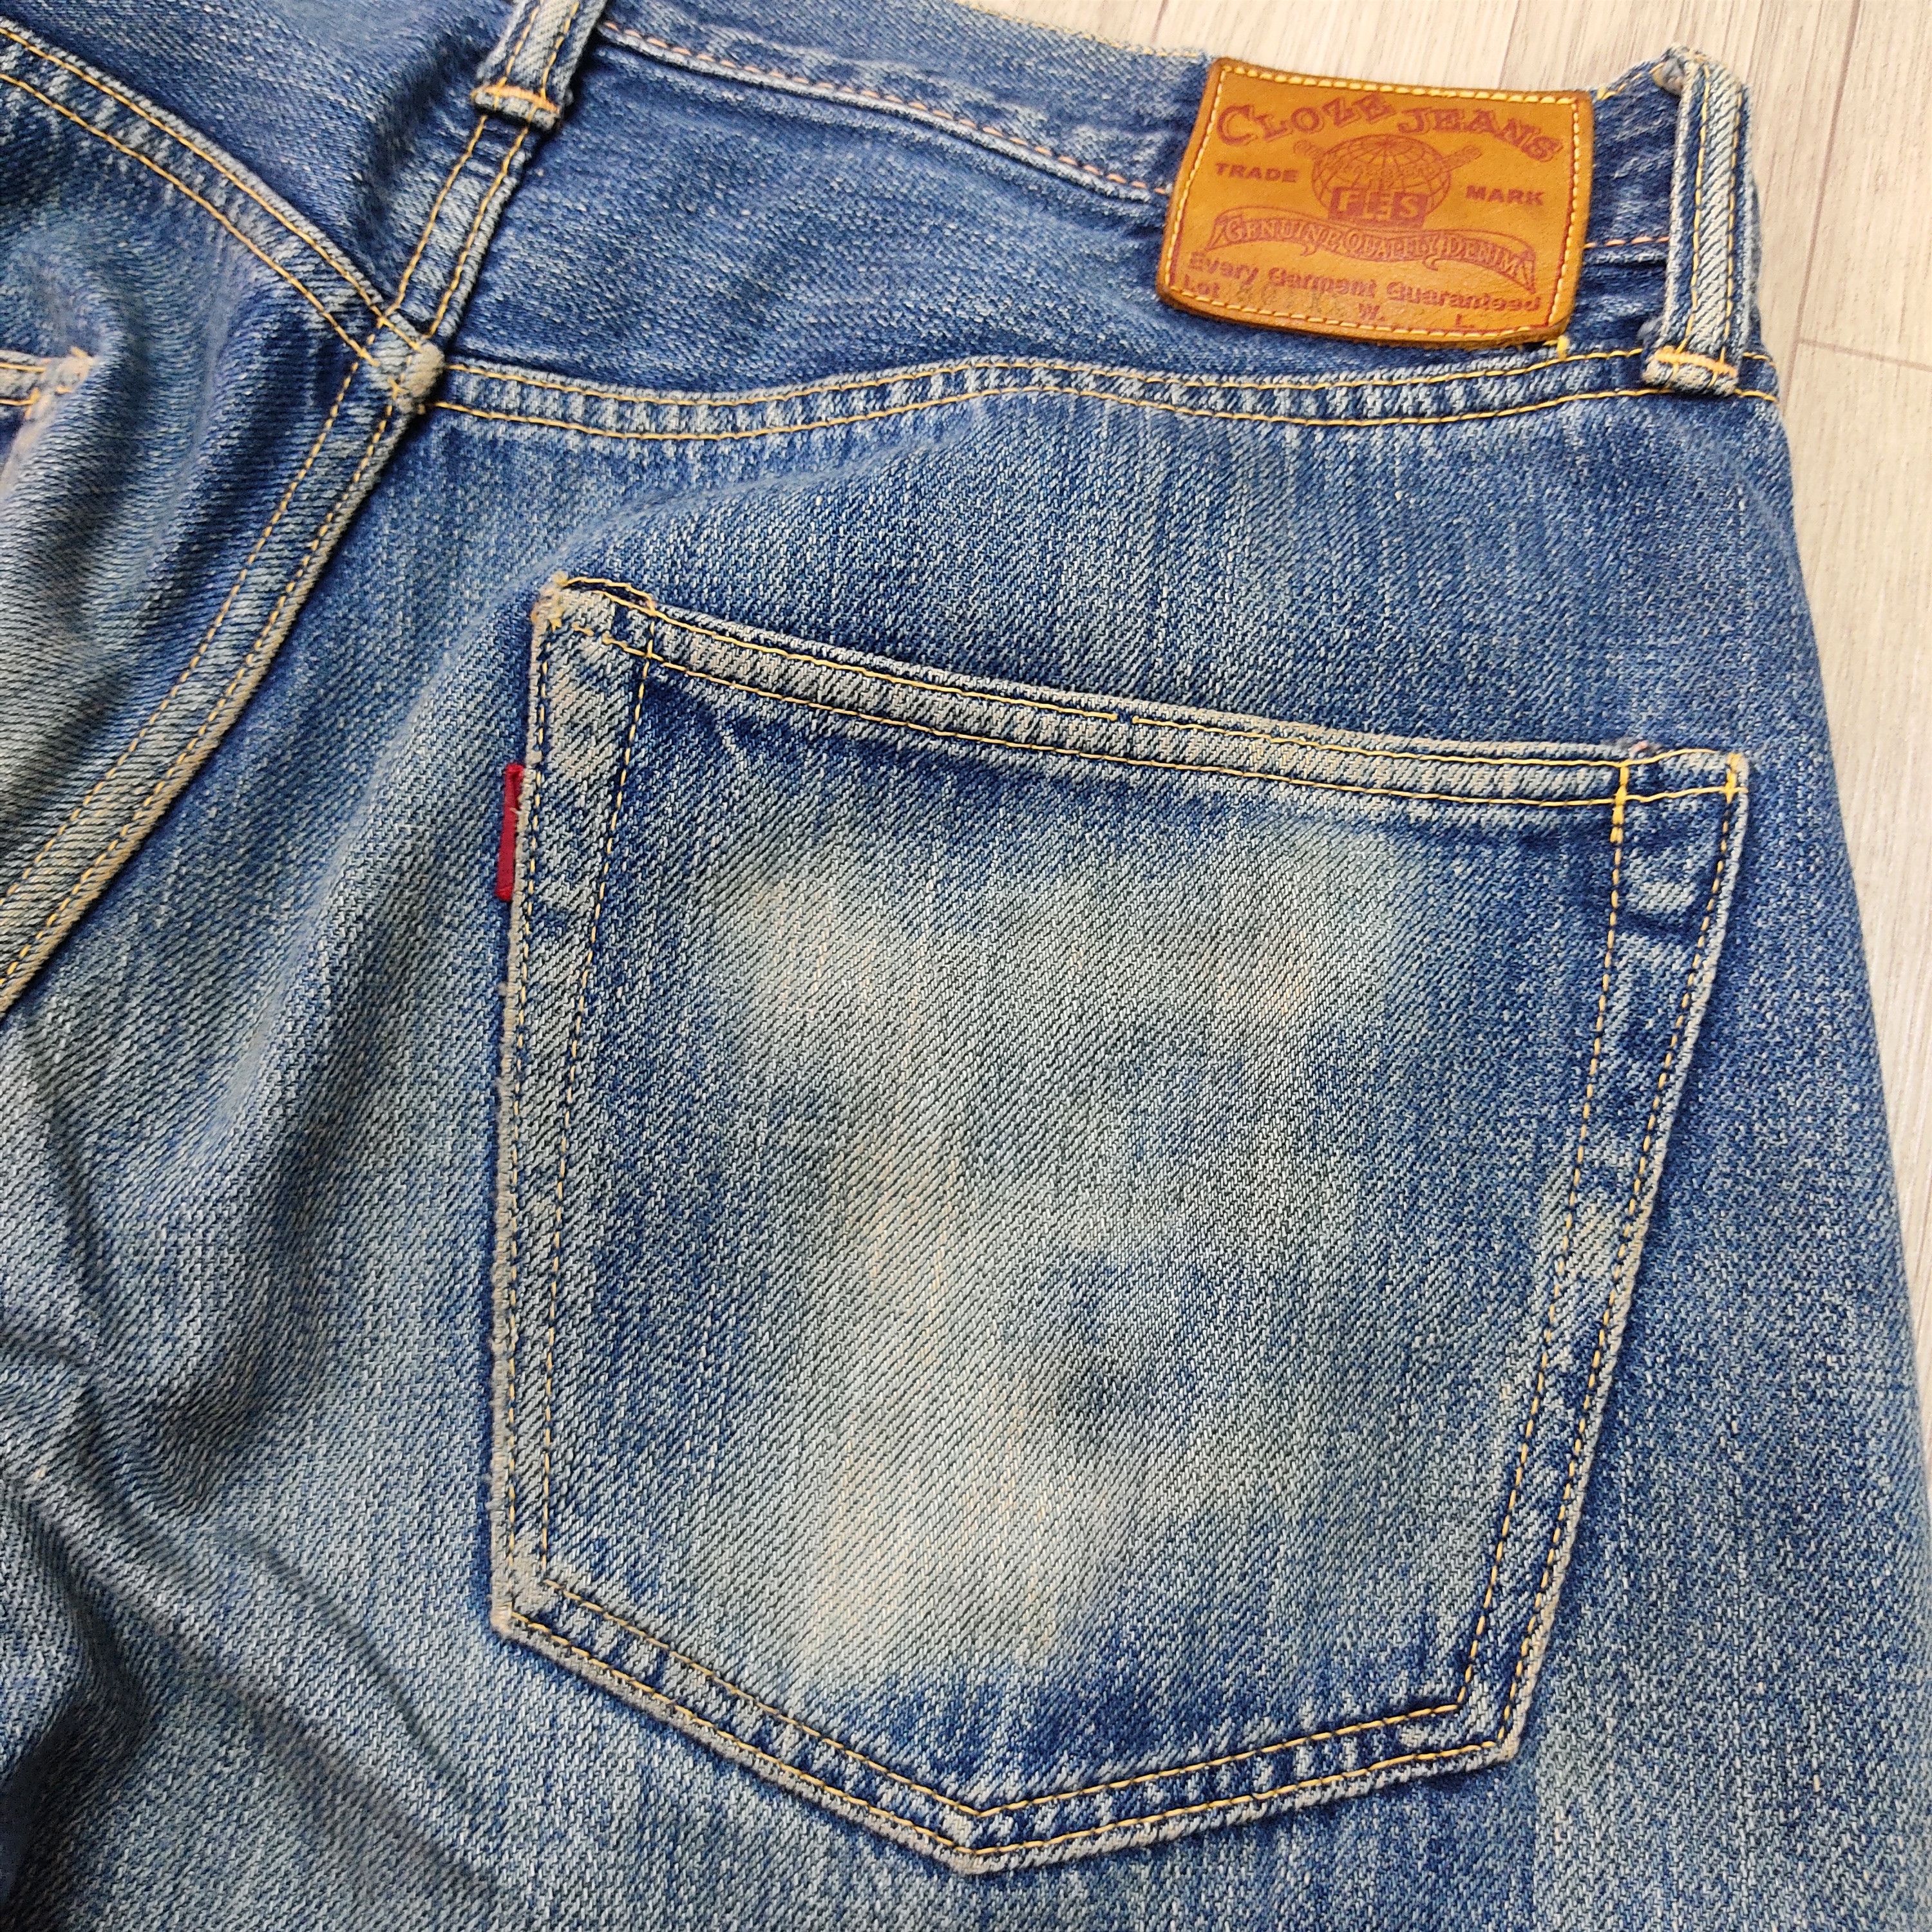 Vintage Cloze Jeans Japanese Selvedge Denim Pants - 11